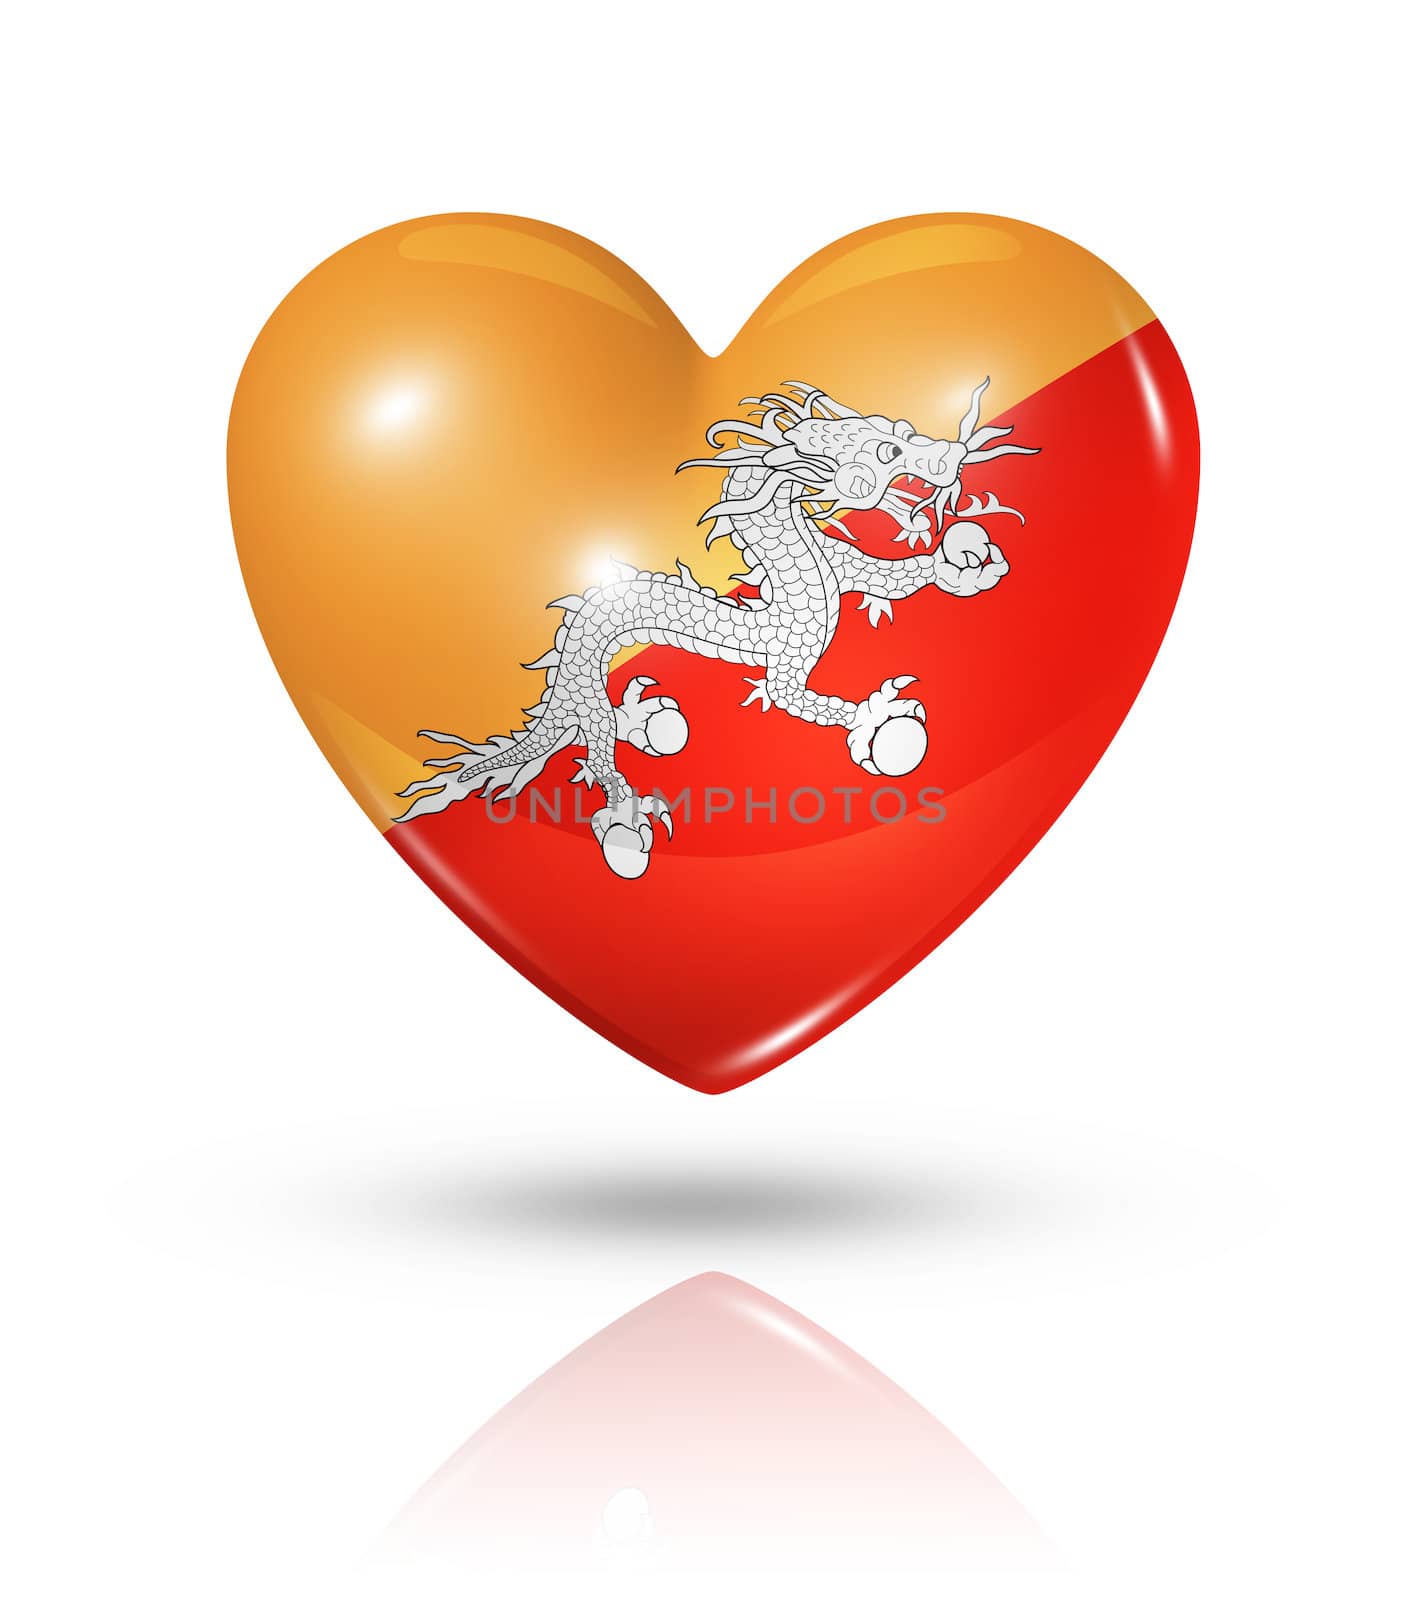 Love Bhutan, heart flag icon by daboost